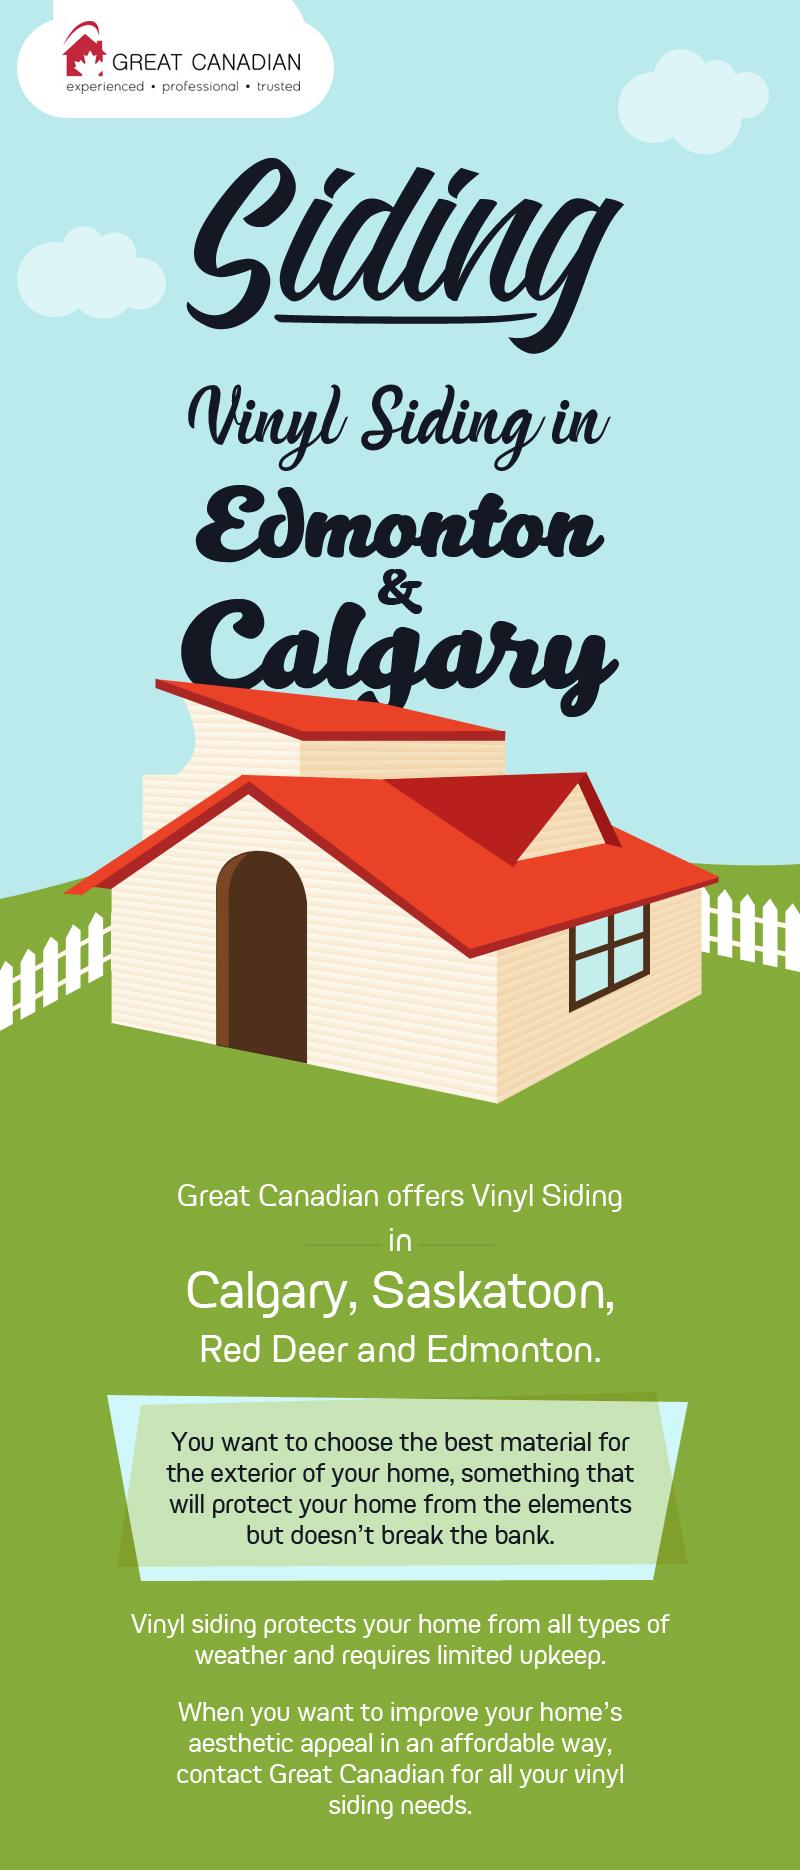 Choose the Best Vinyl Siding in Edmonton & Calgary from Great Canadian